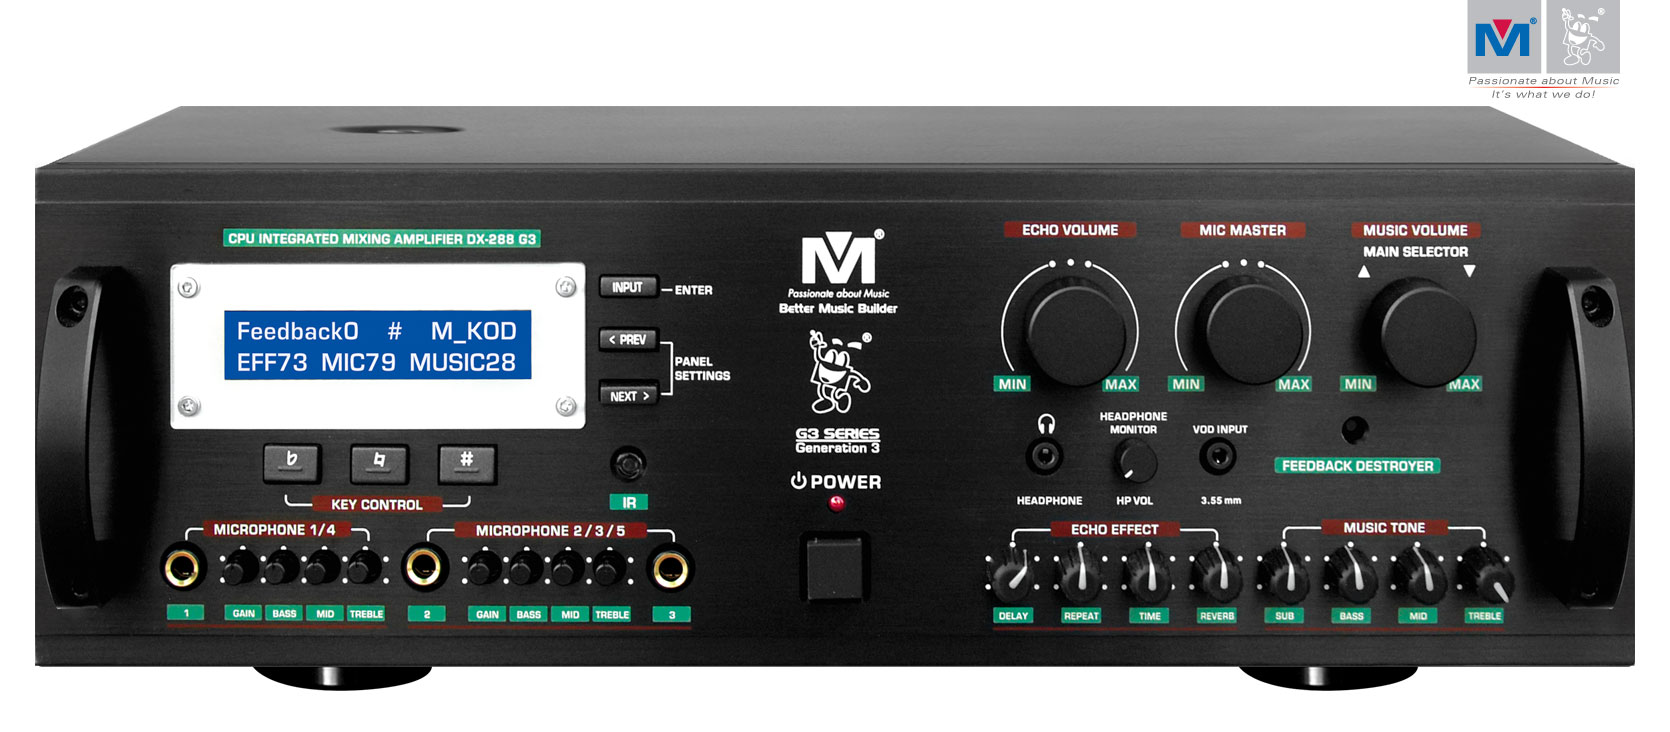 Better Music Builder (M) DX-288 G3 900W CPU Integrated Mixing Amplifier